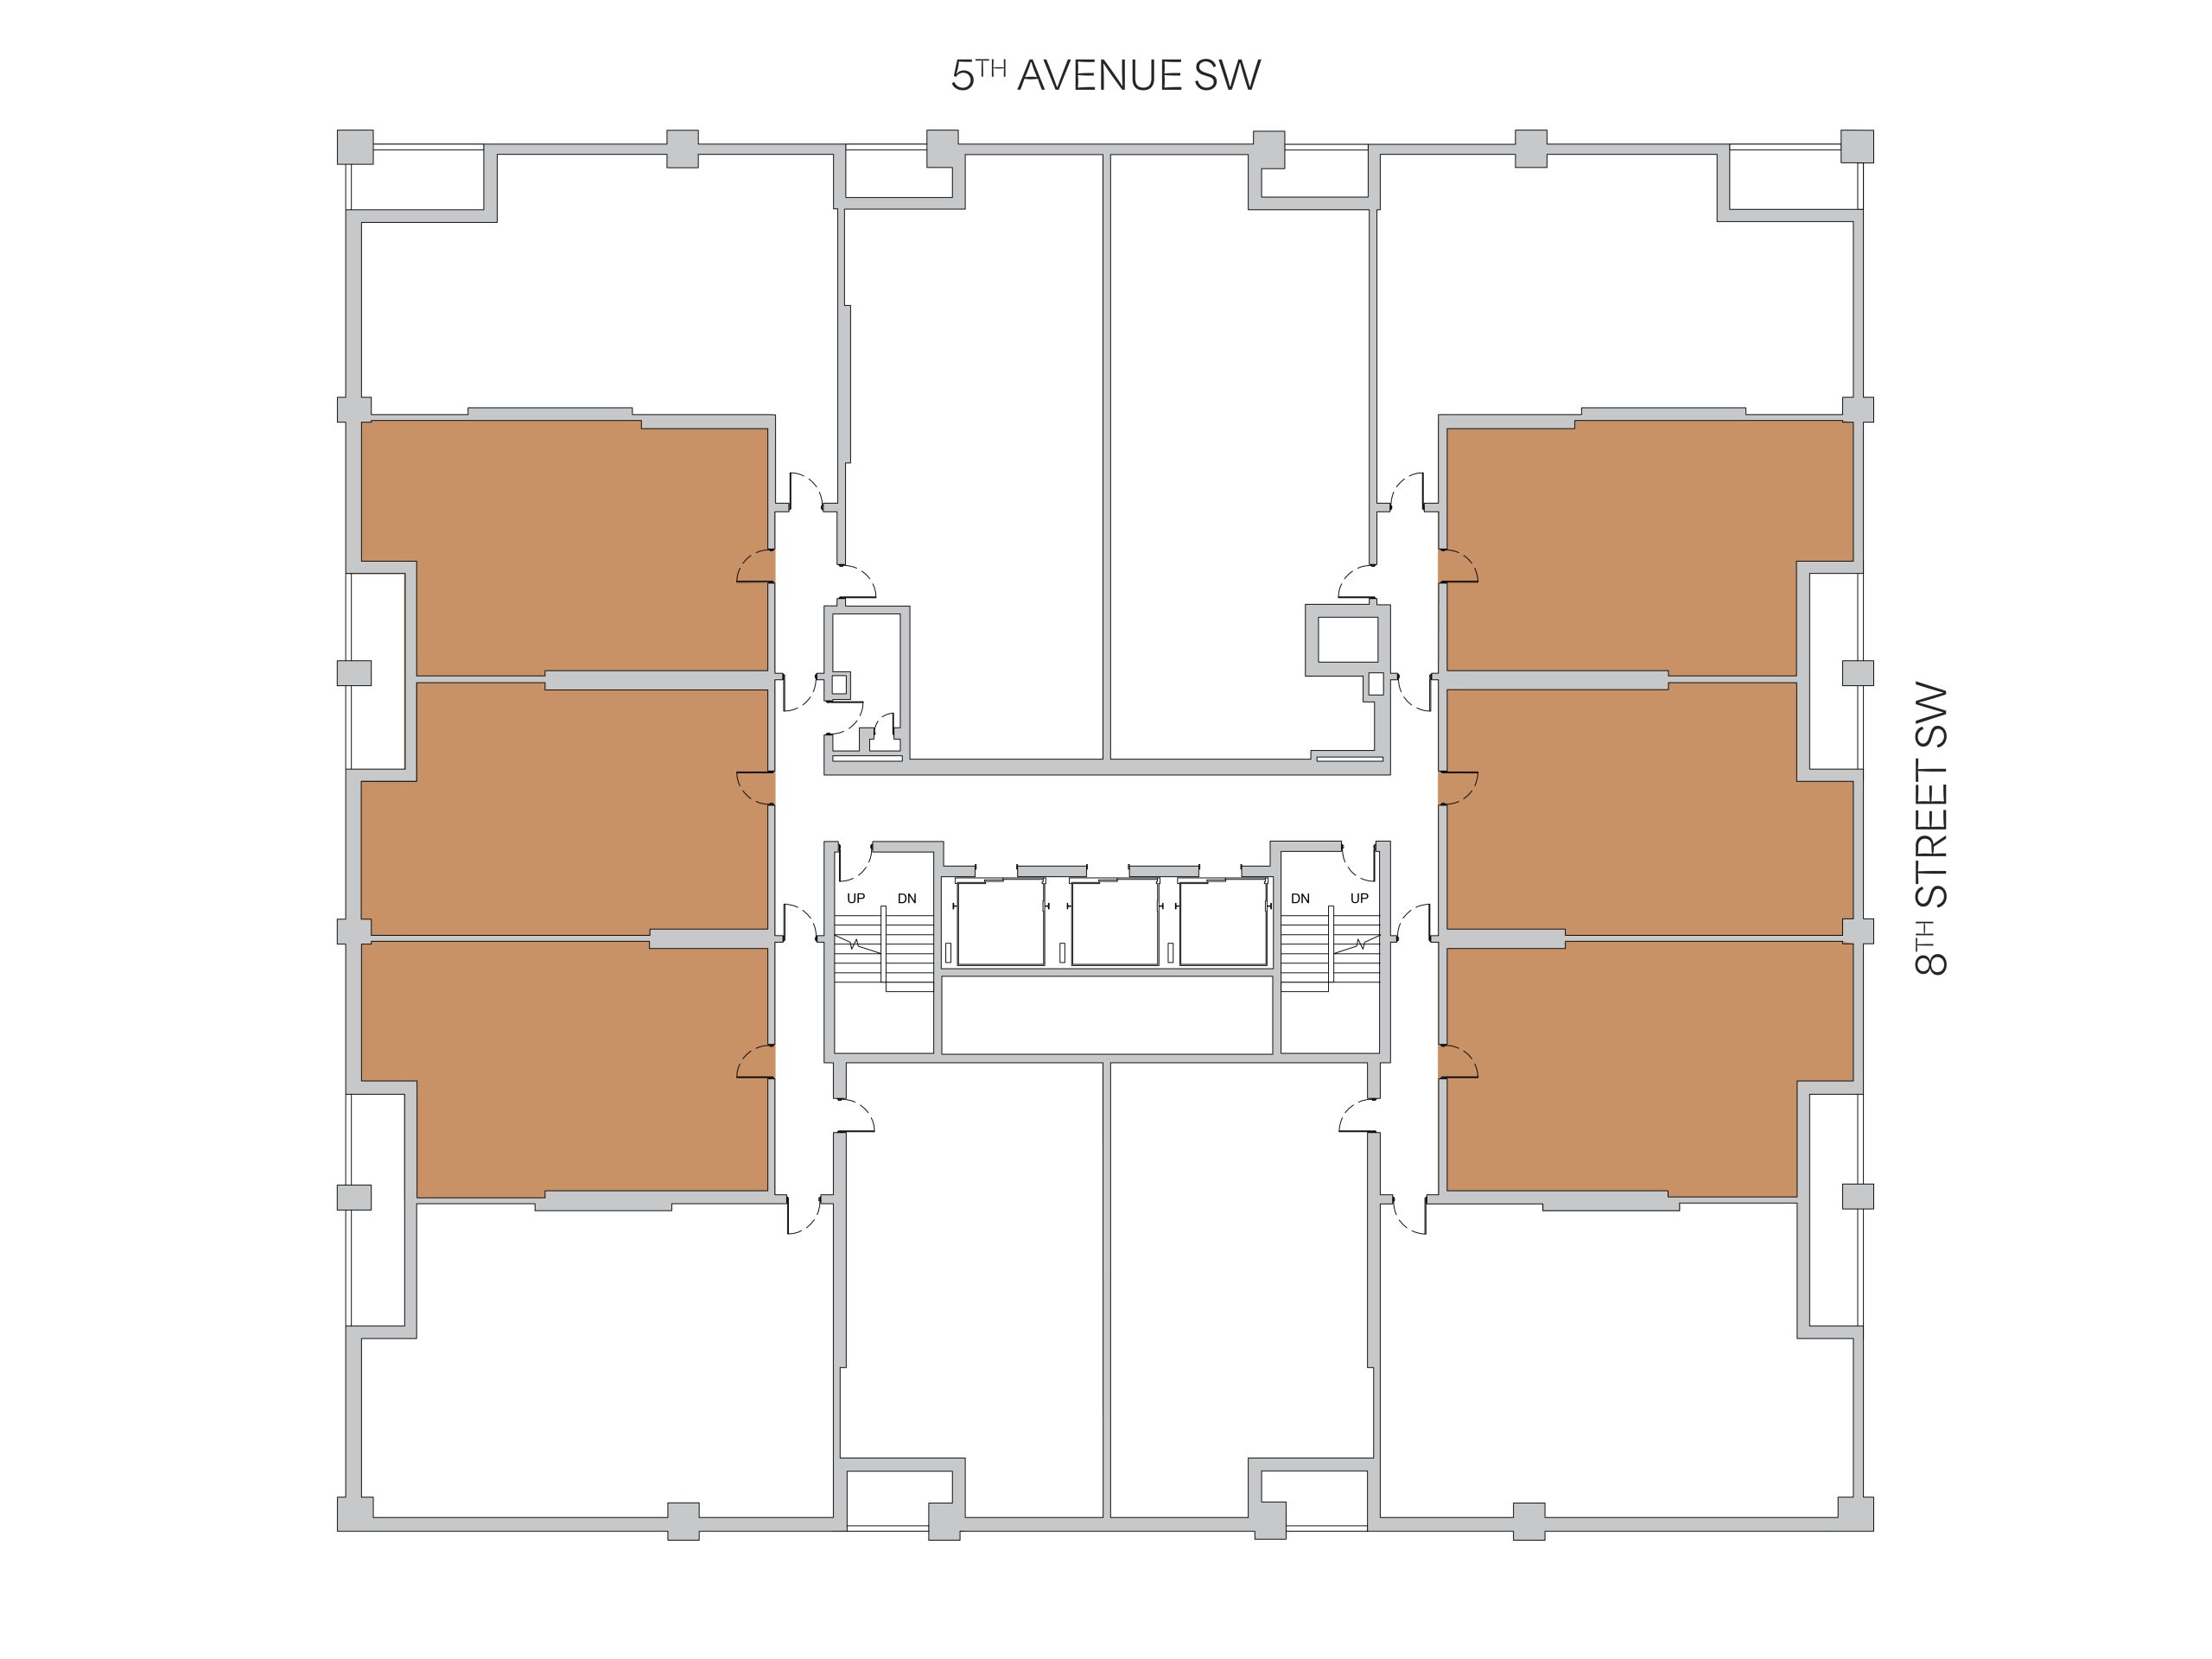 Location of Ammolite floor plans in The Cornerstone building